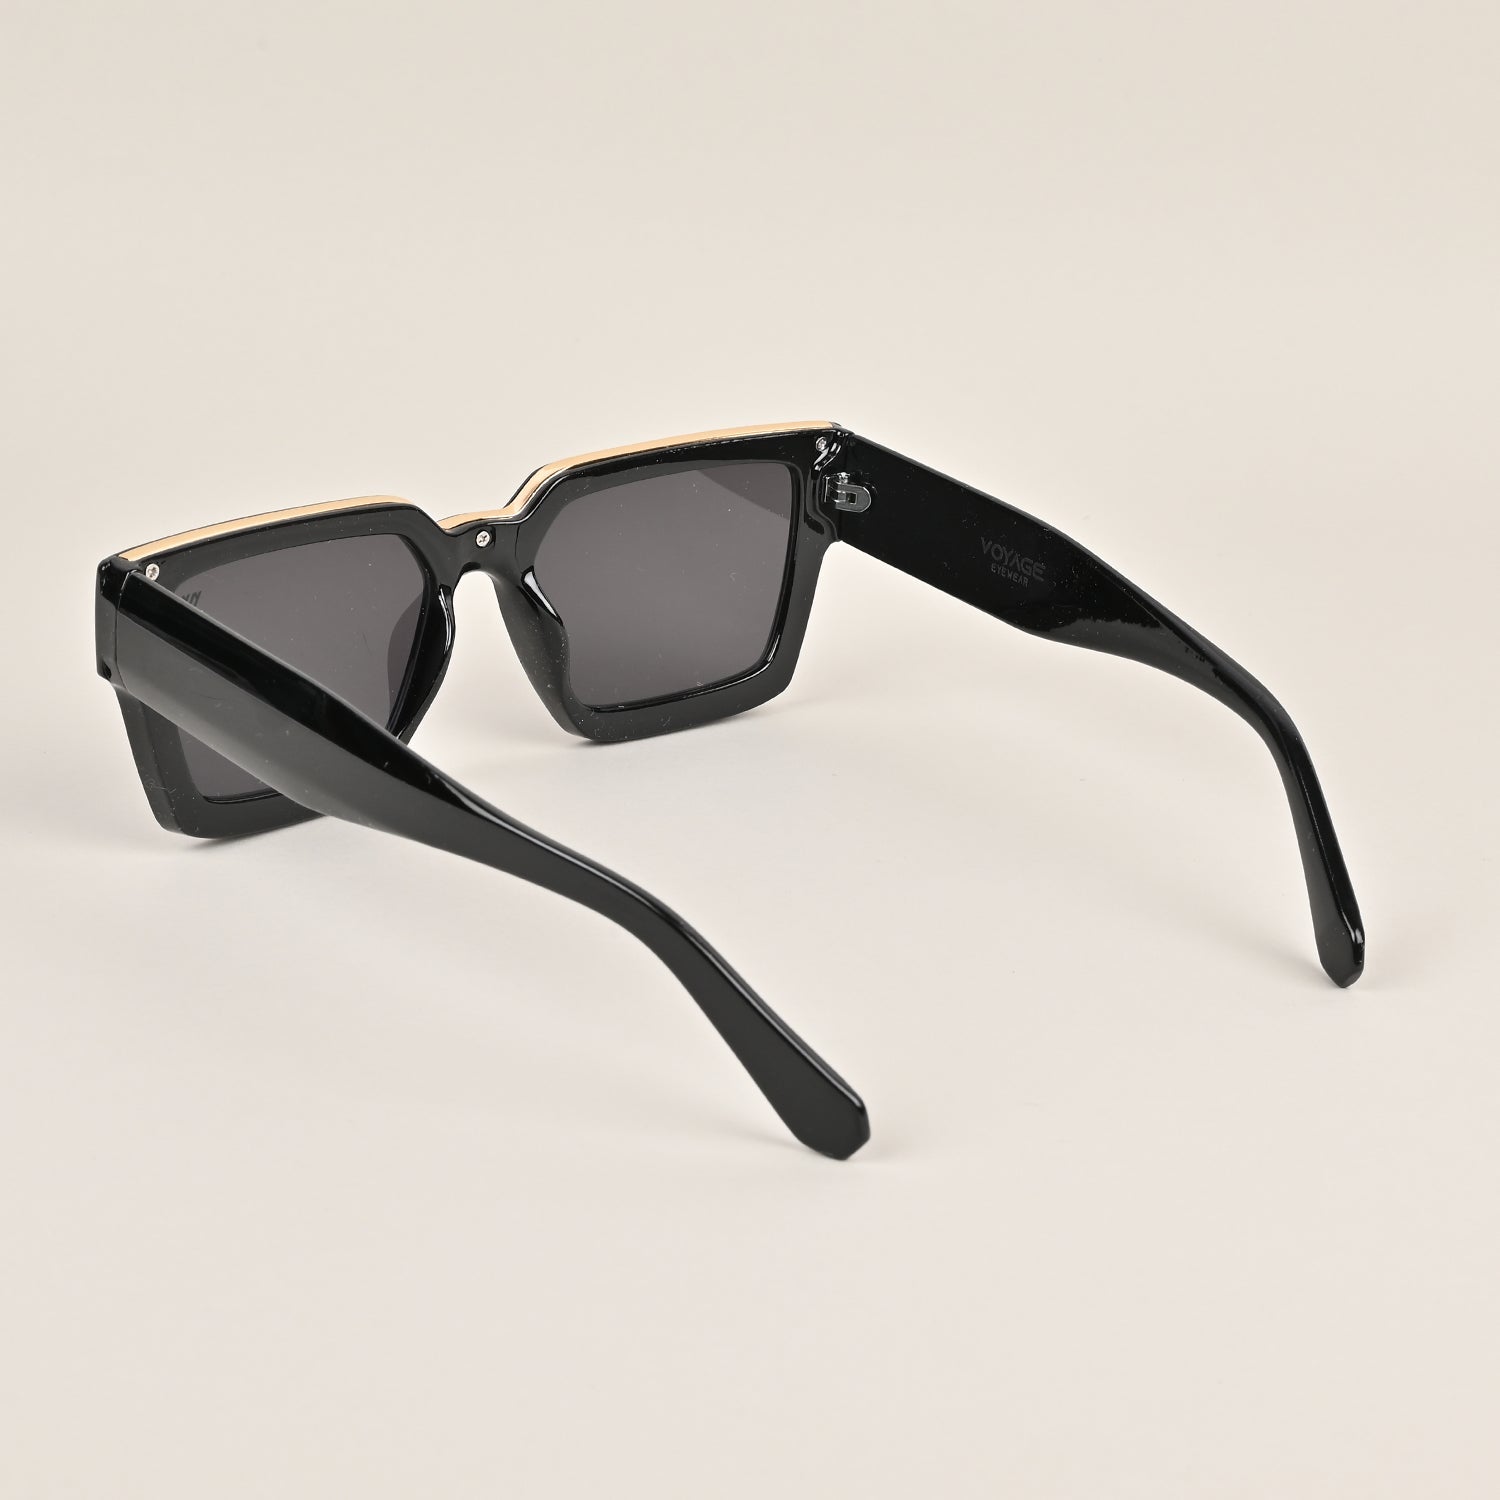 Voyage Black Wayfarer Sunglasses - MG3669